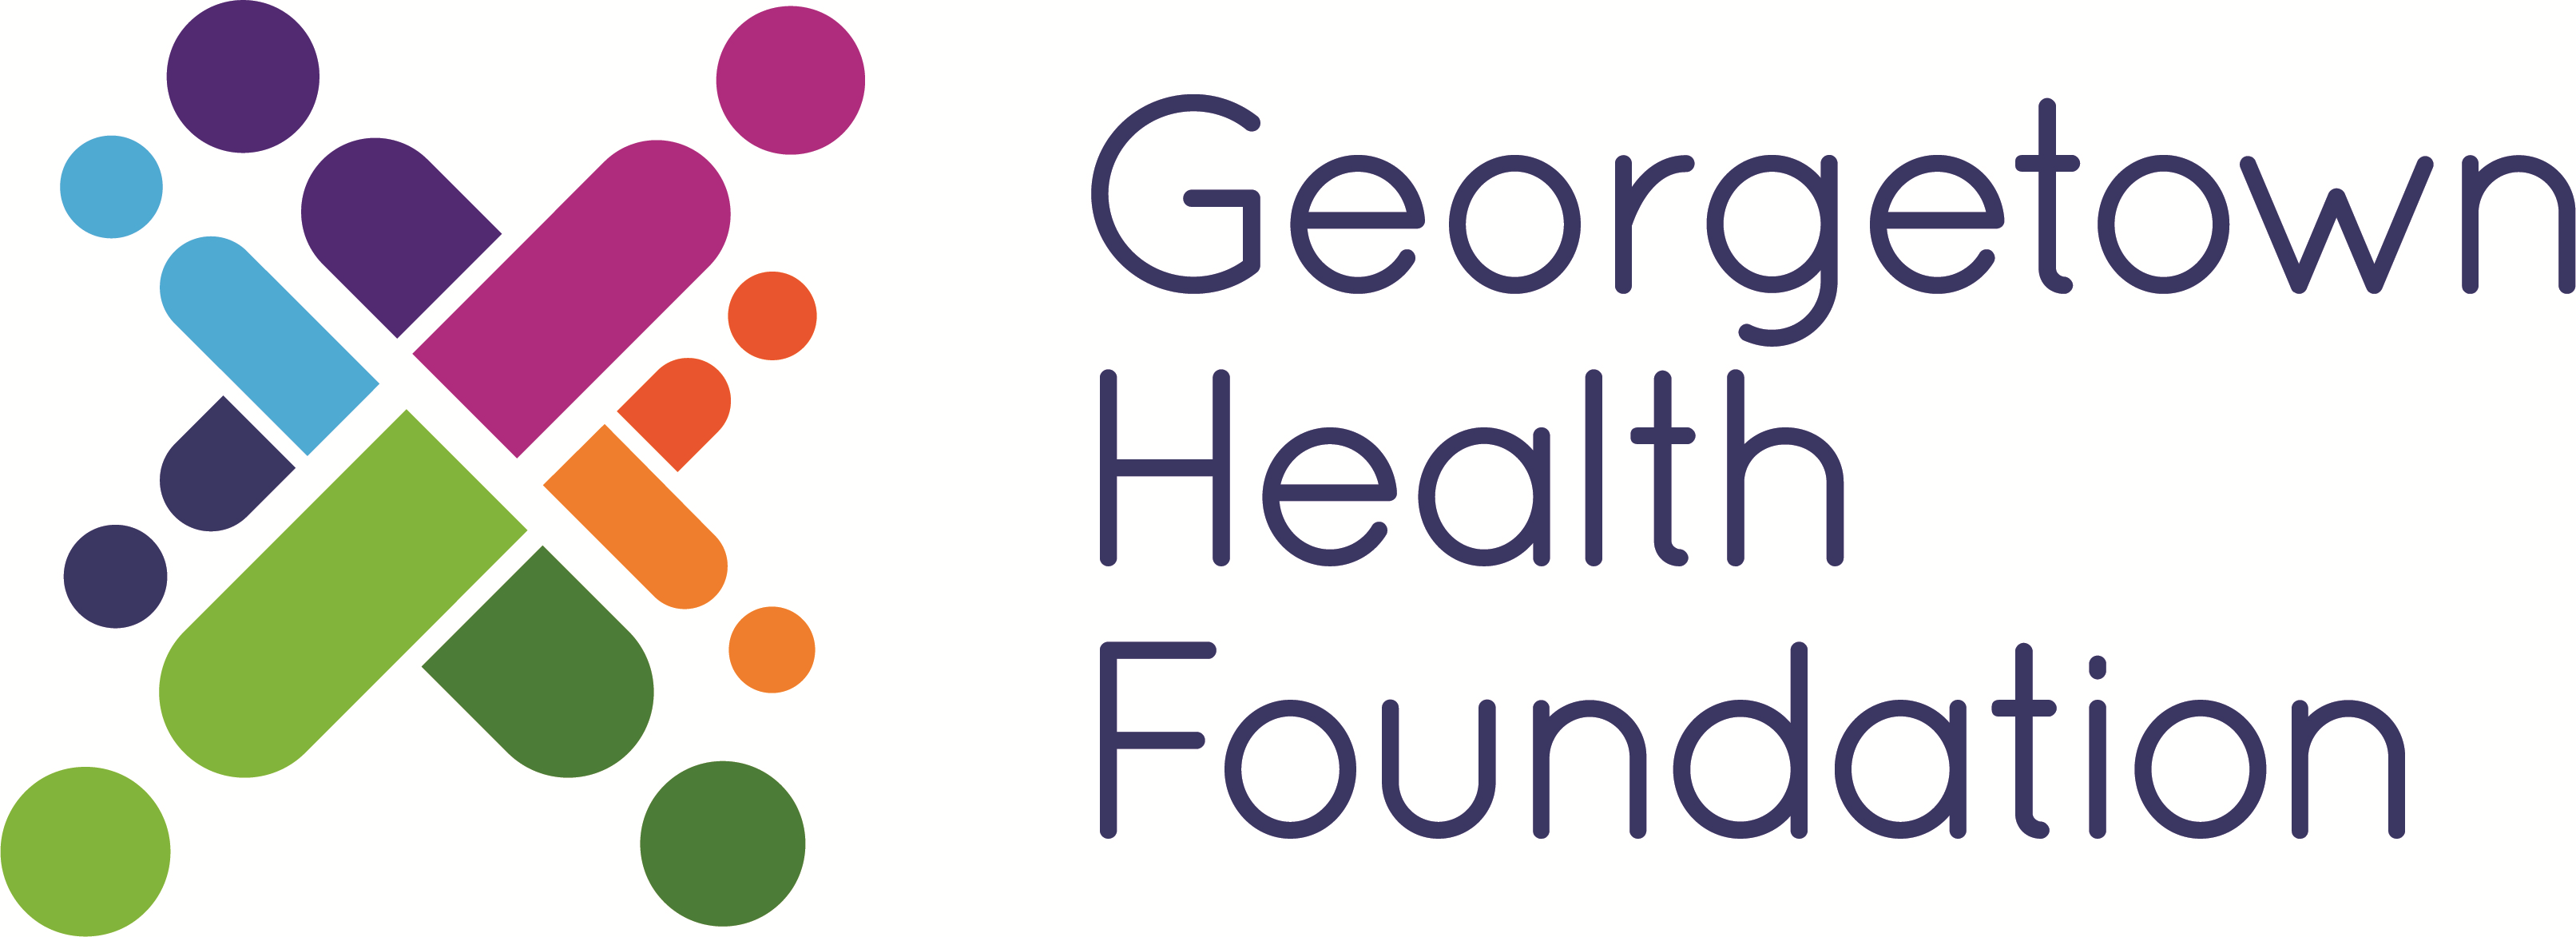 georgetown health foundation